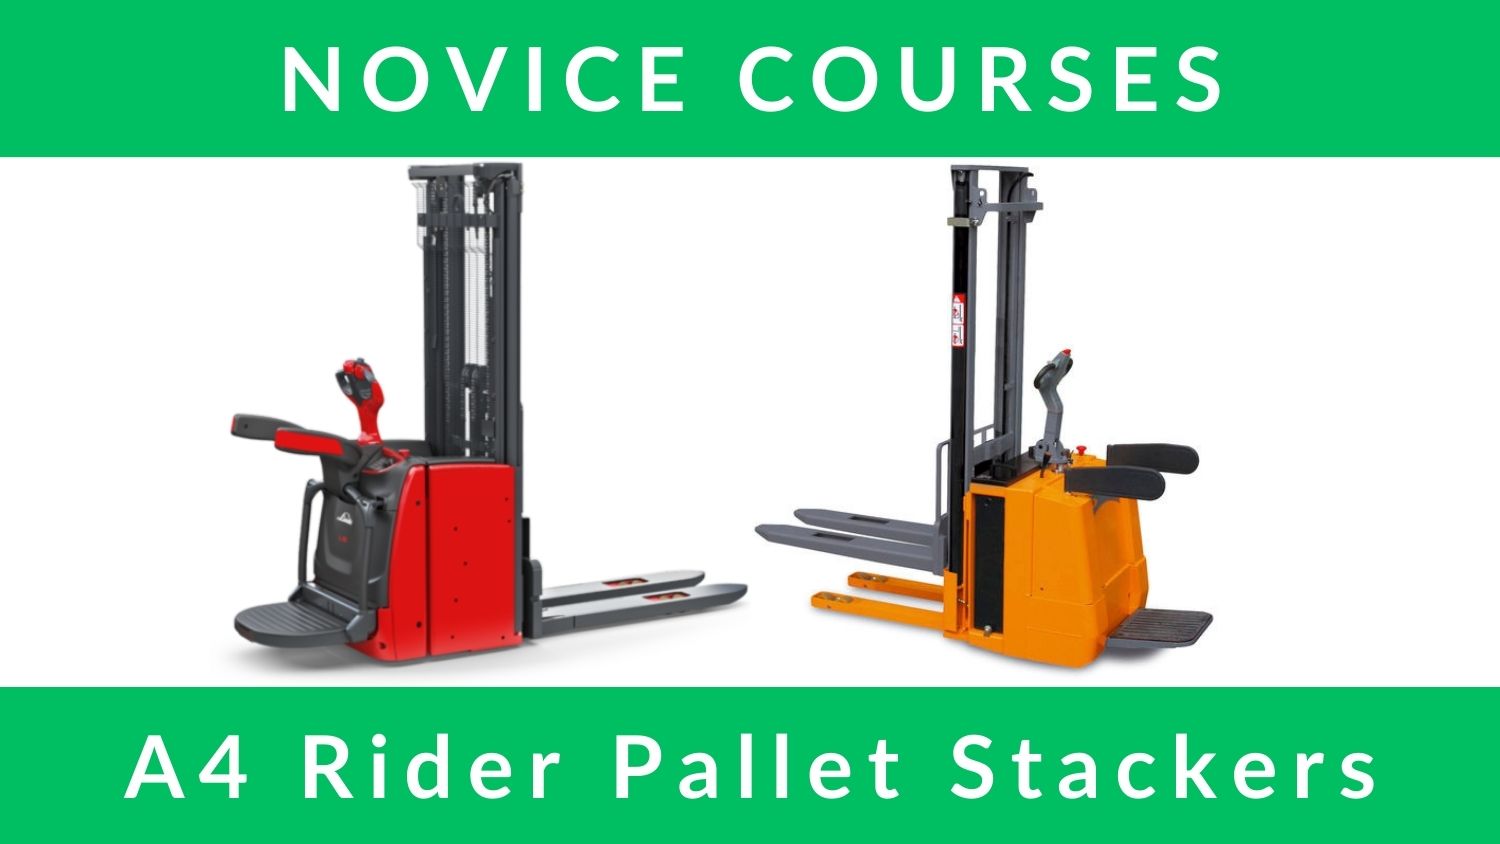 RTITB Rider Pallet Stacker Novice Courses